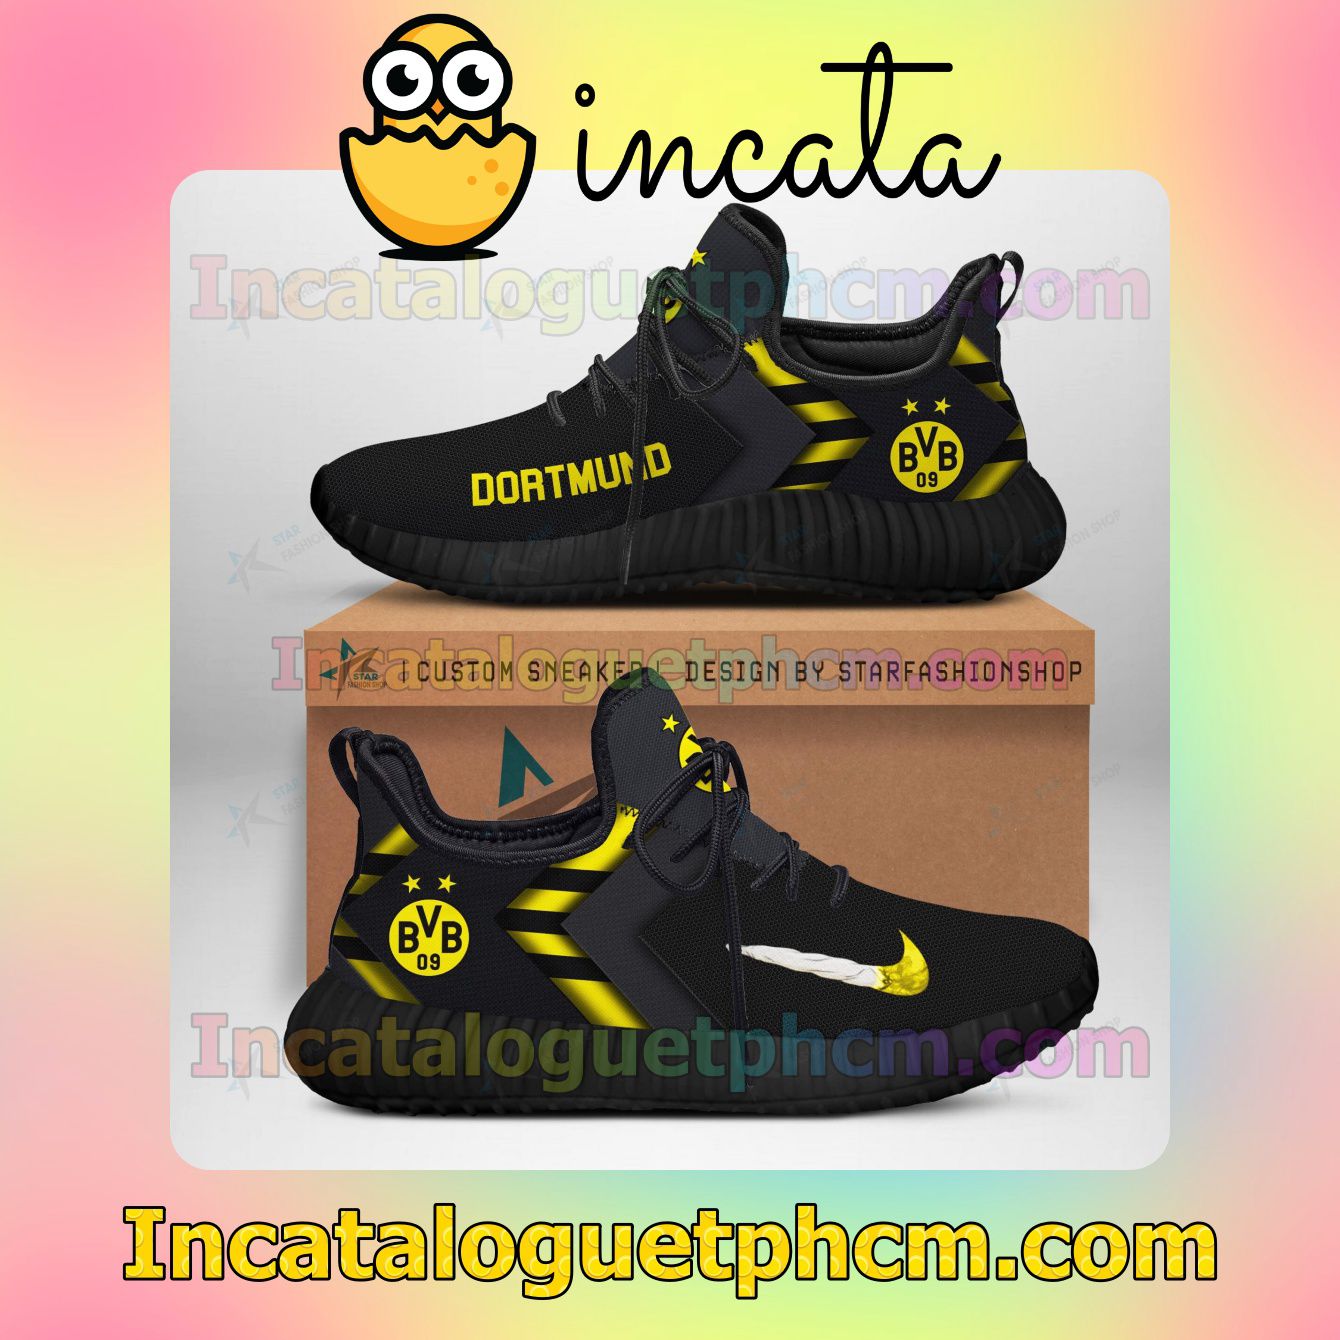 Borussia Dortmund Ultraboost Yeezy Shoes Sneakers